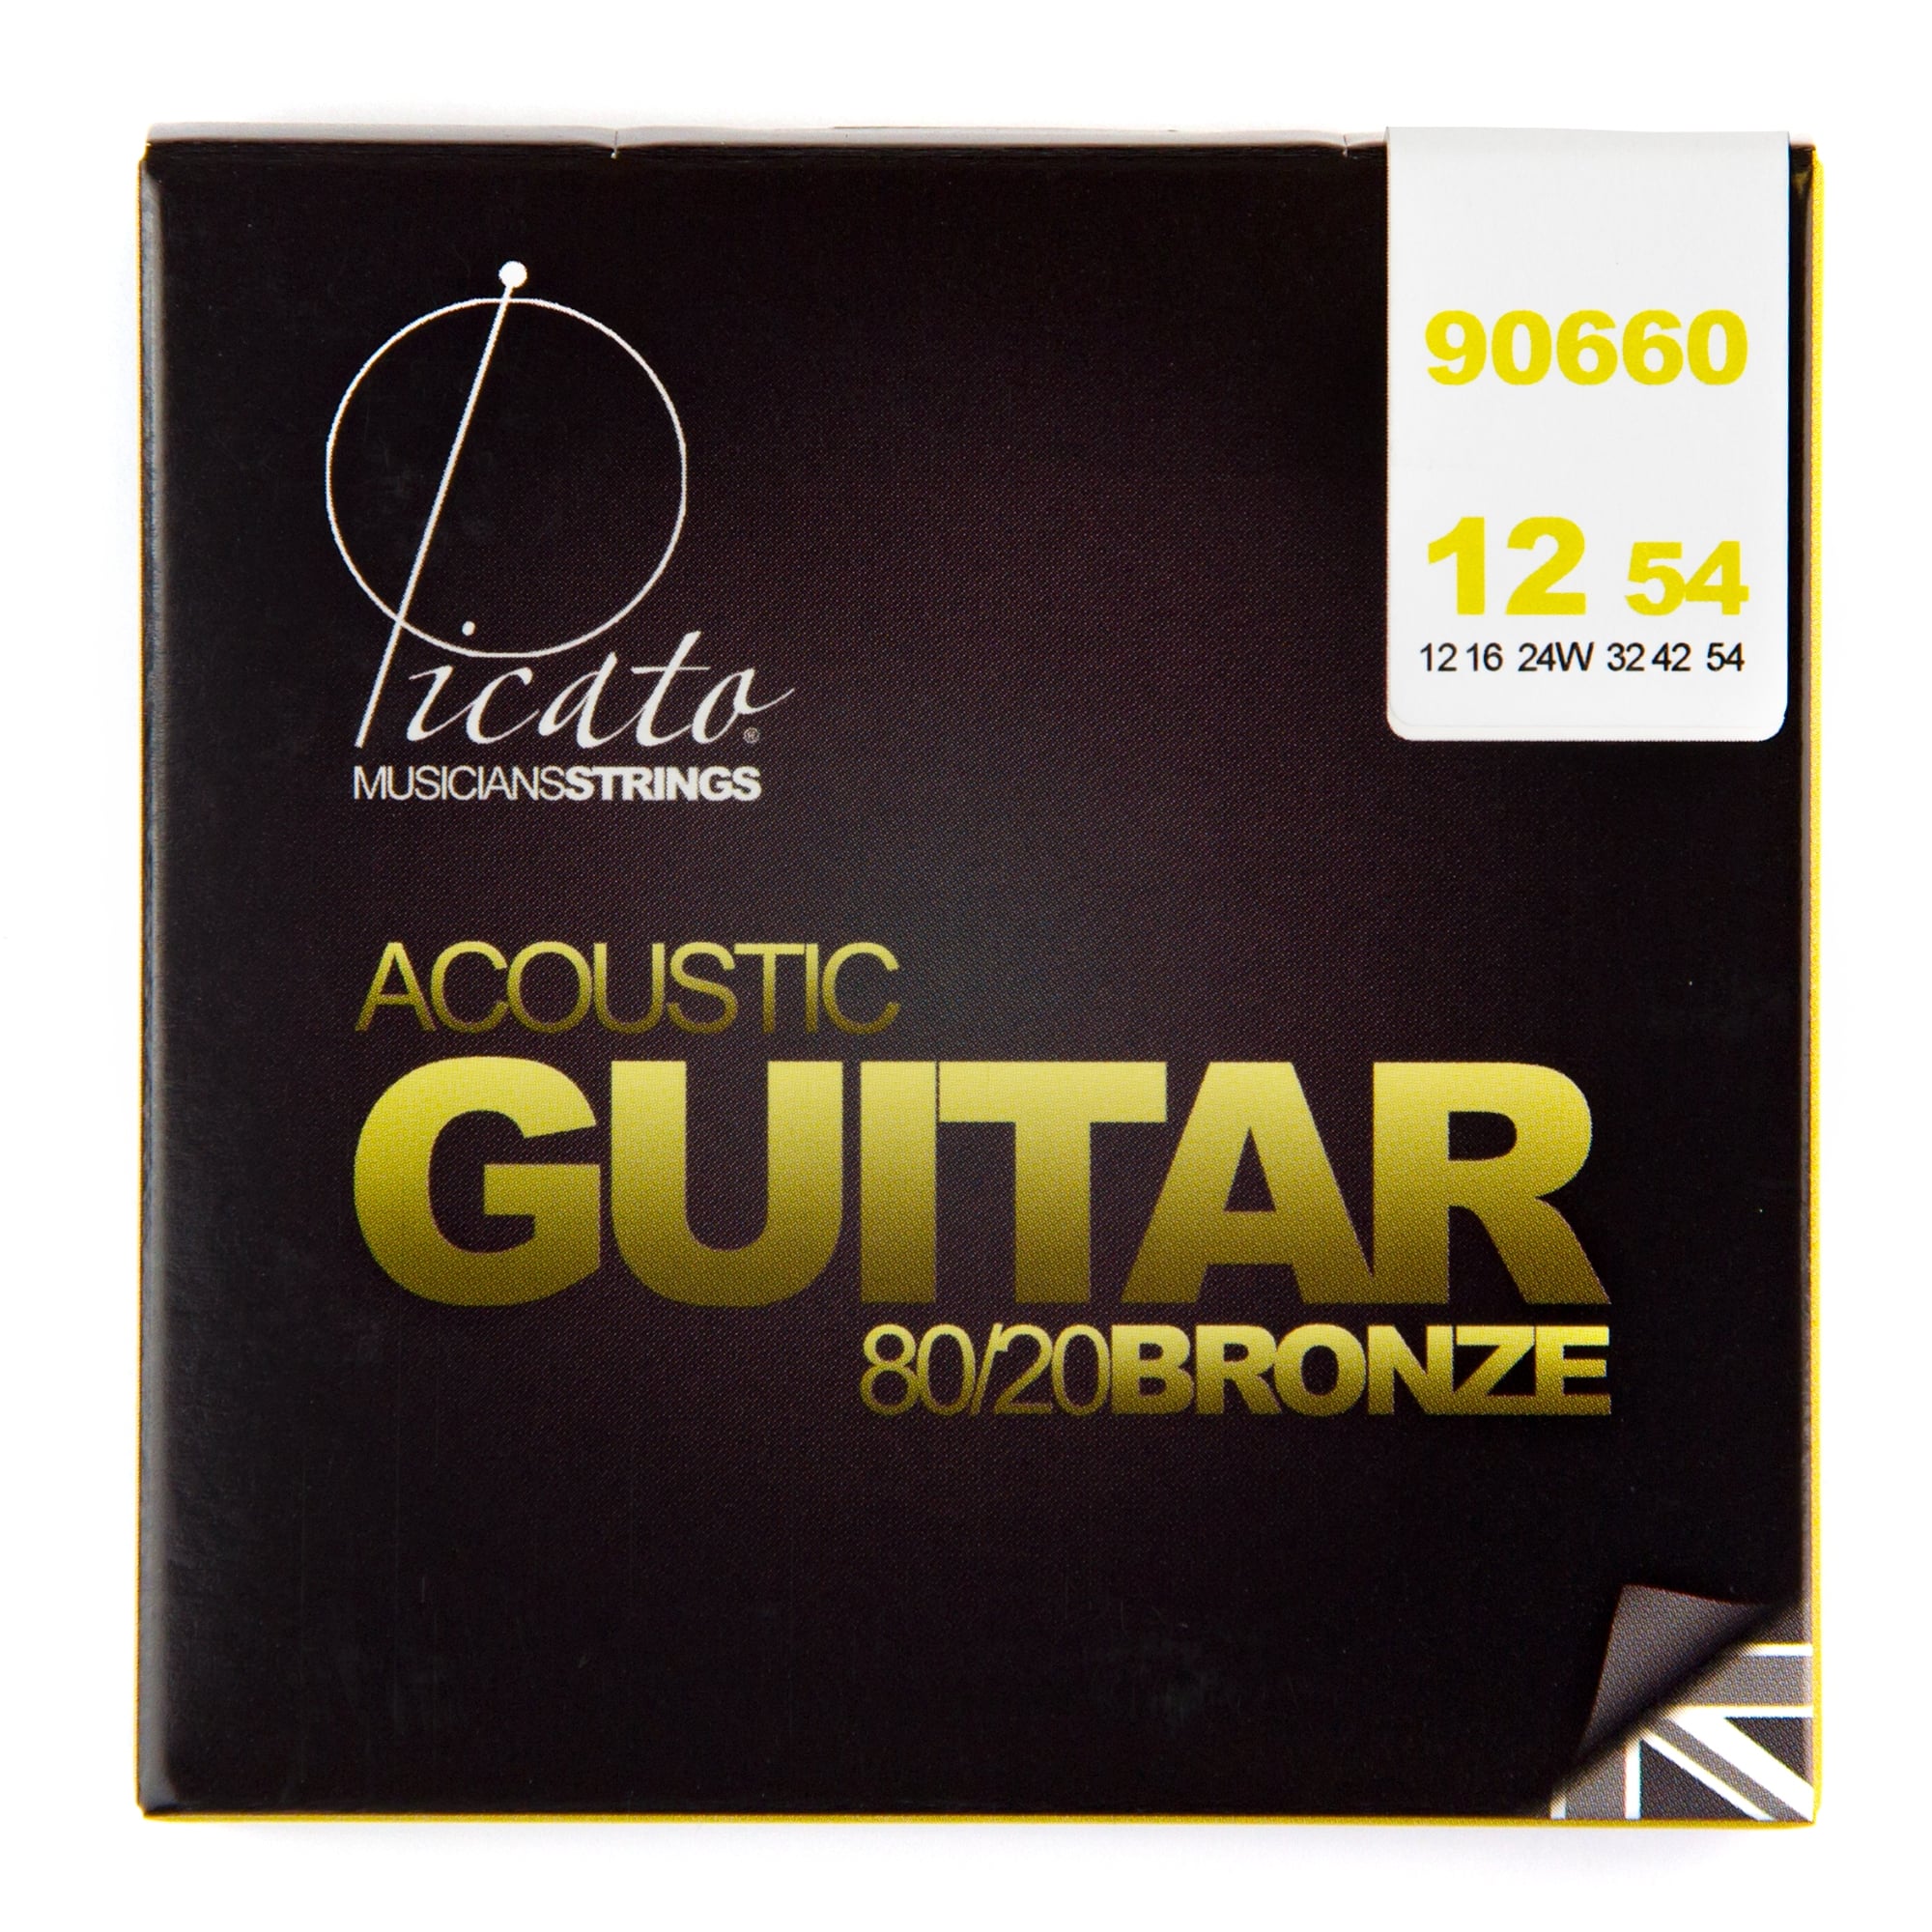 Picato 80/20 Bronze 12-54 Acoustic Guitar Strings, Light